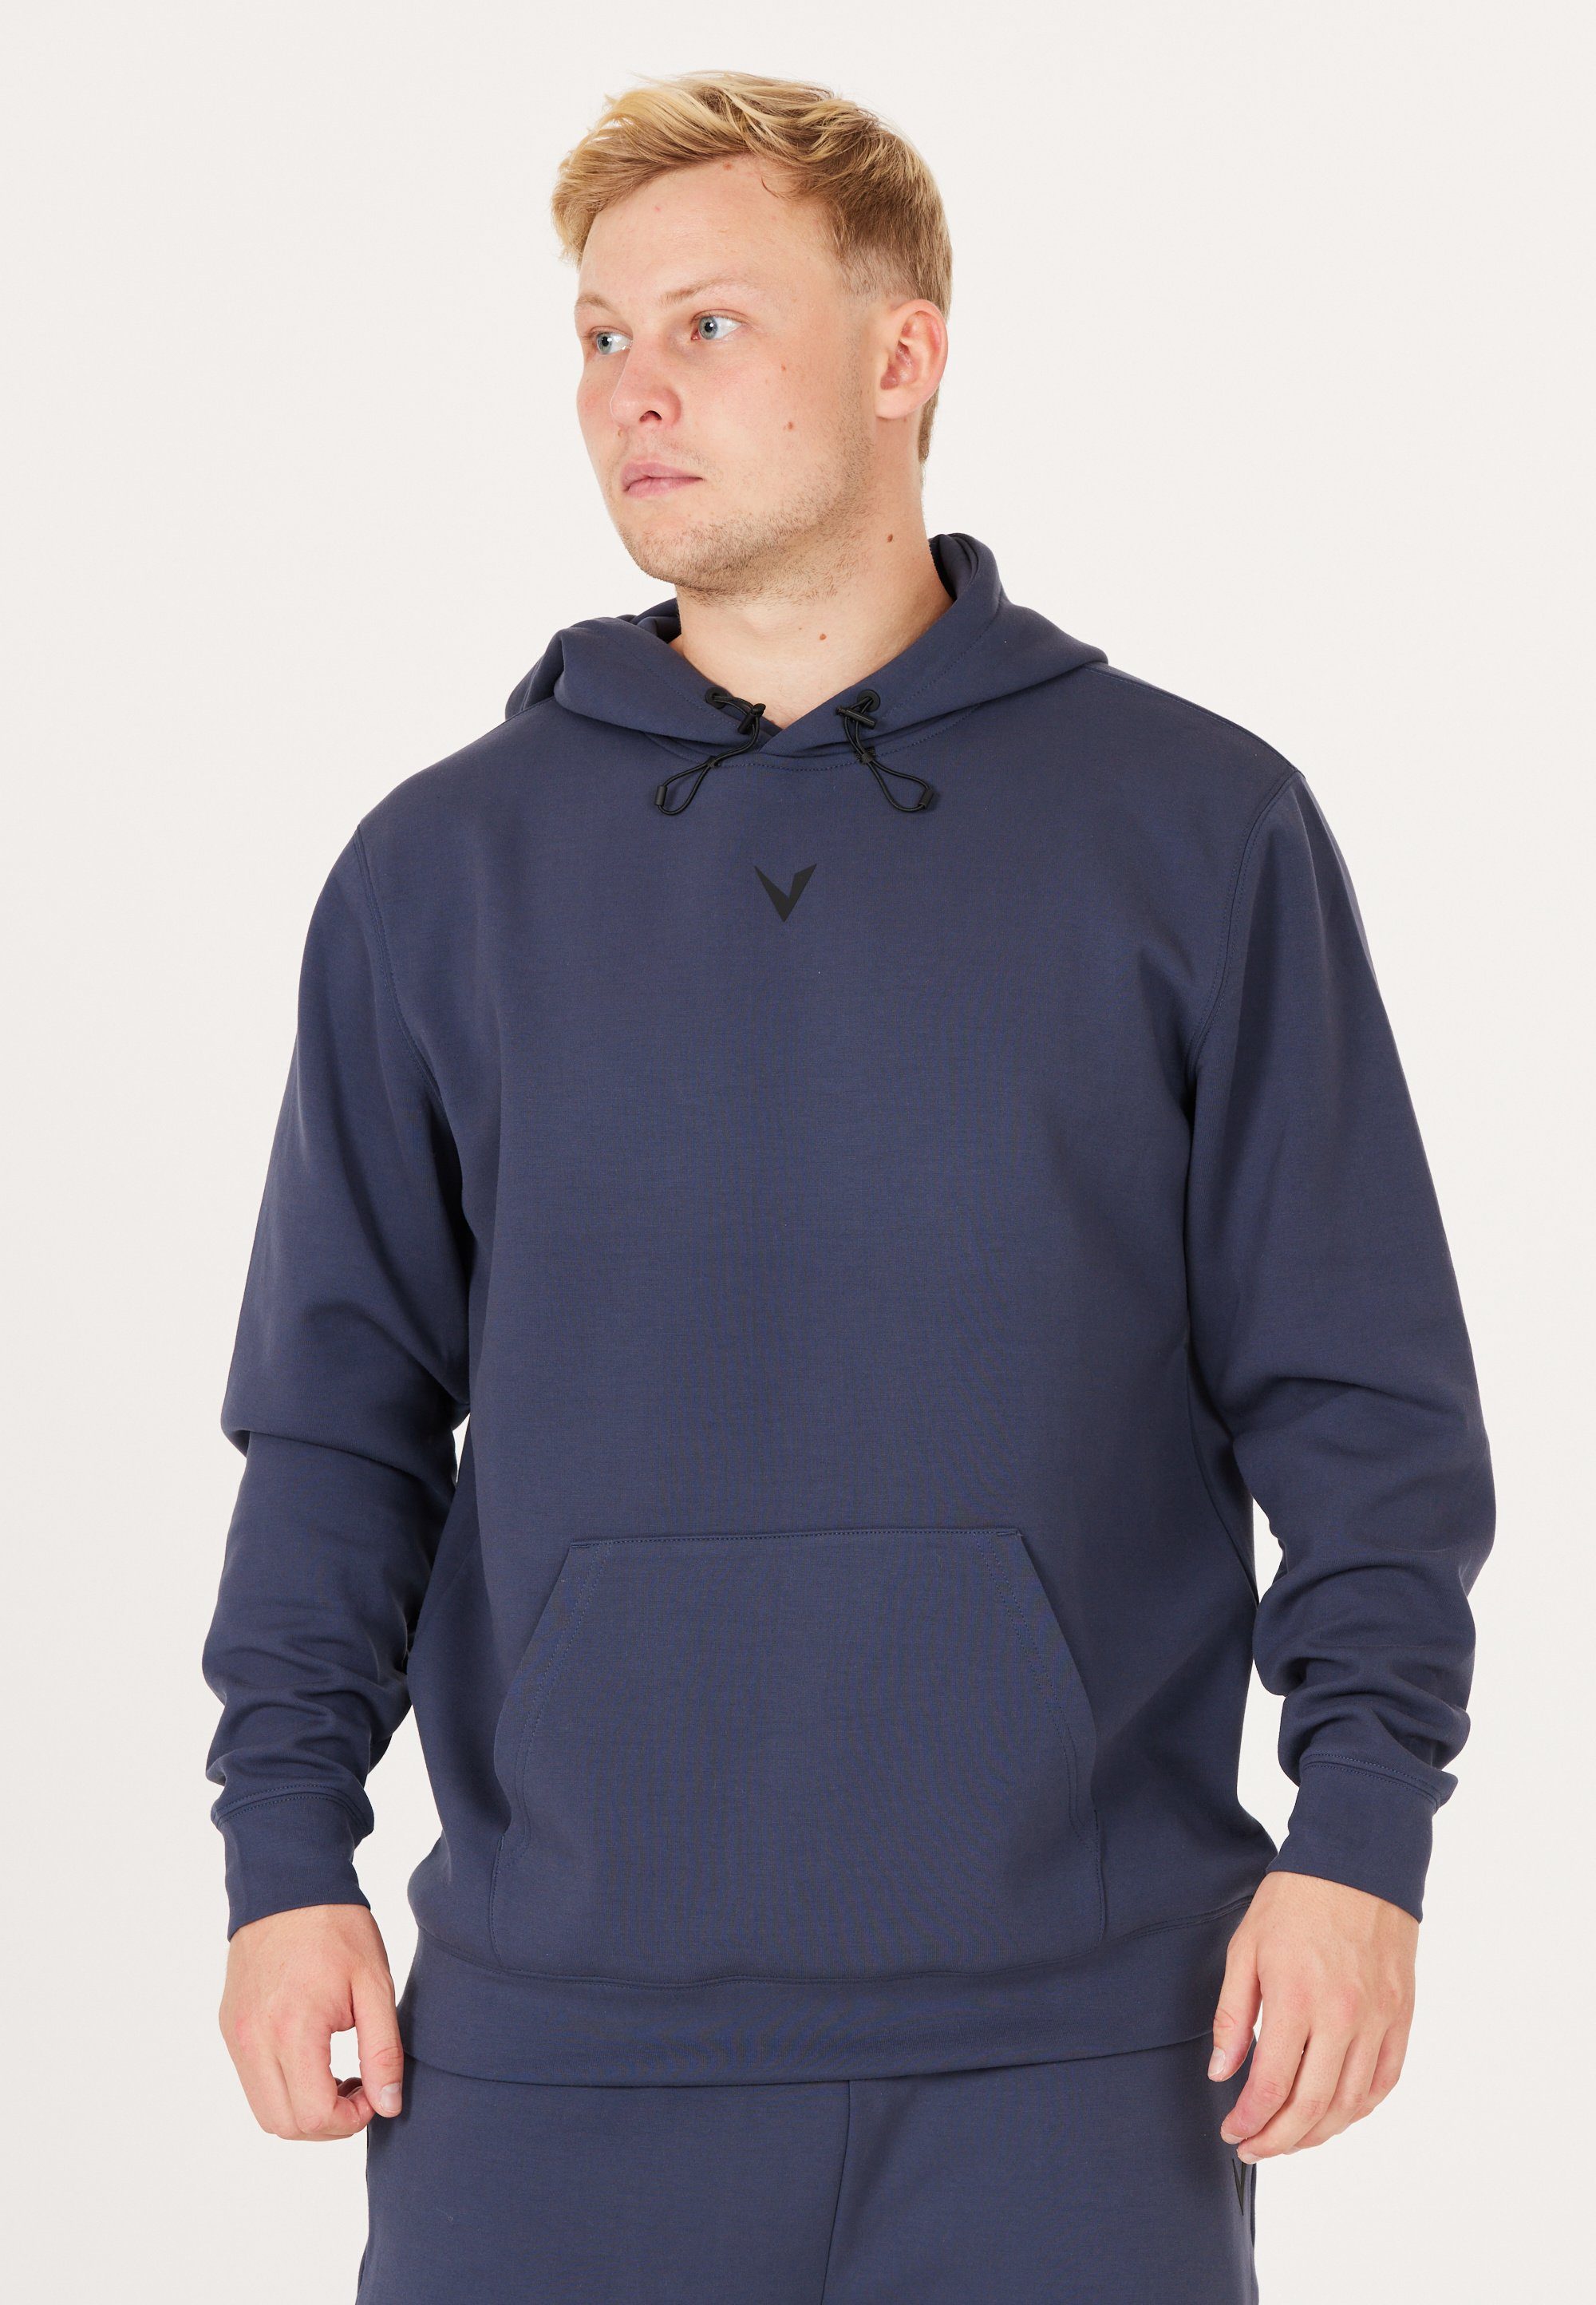 Virtus Sweatshirt Taro mit kuscheliger, einstellbarer Kapuze dunkelblau | Sweatshirts